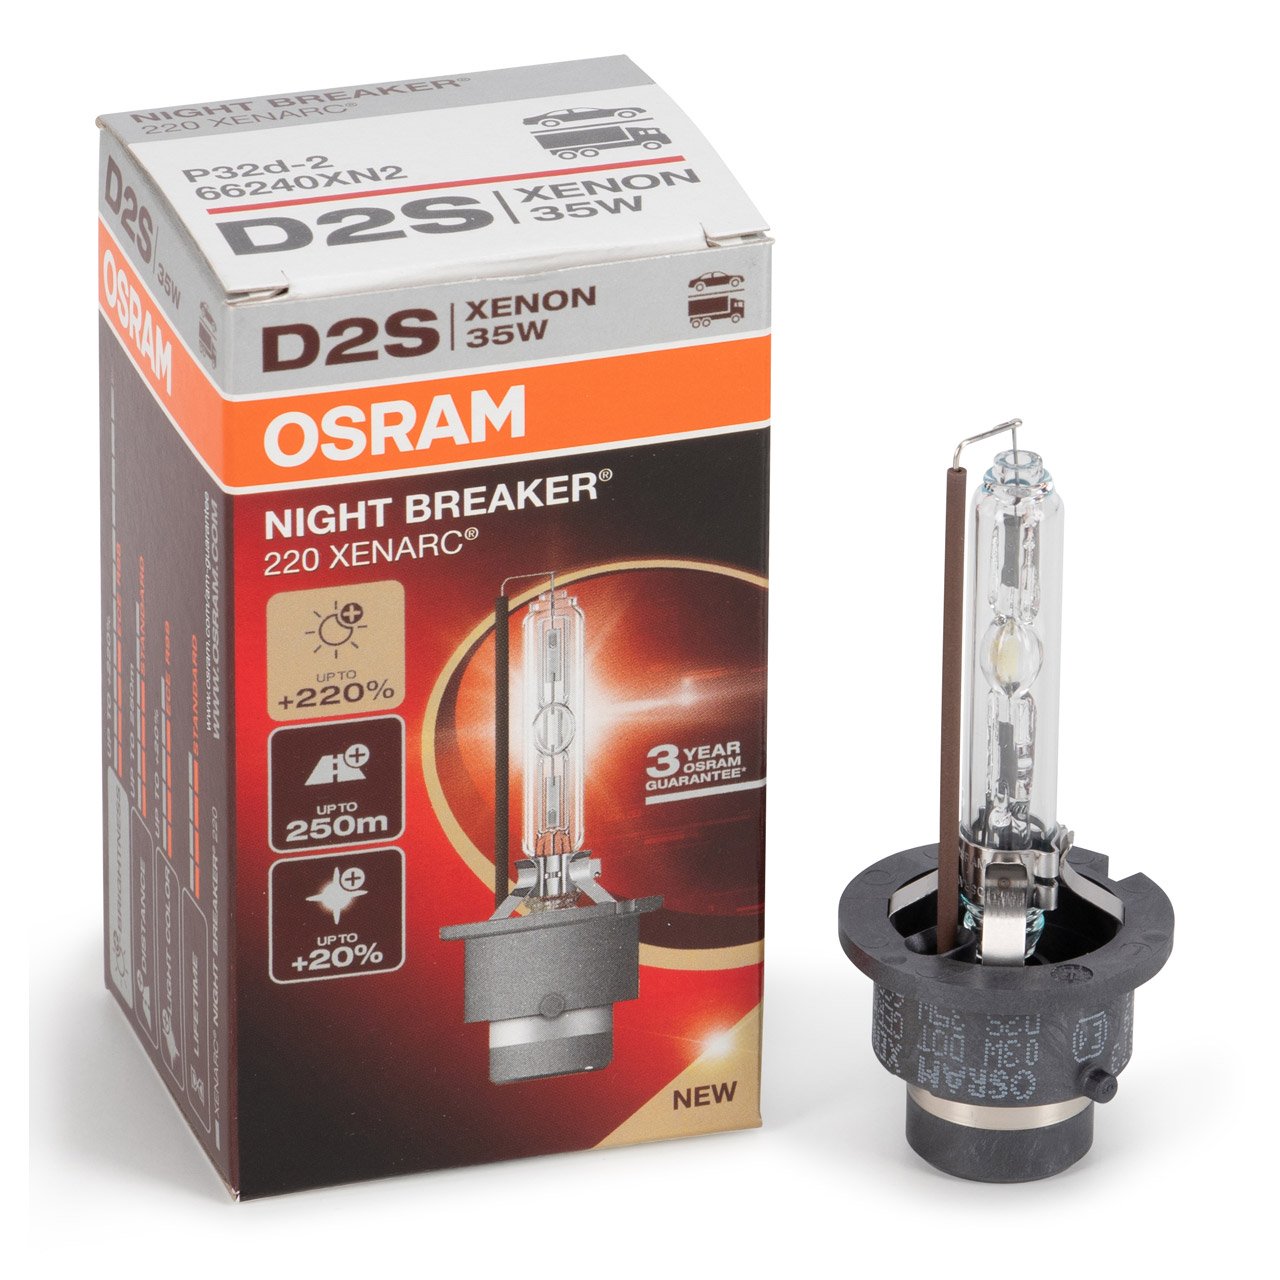 1x OSRAM D2S NIGHT BREAKER 220 XENARC 85V 35W P32d-2 +220% VERSION 2024/2025